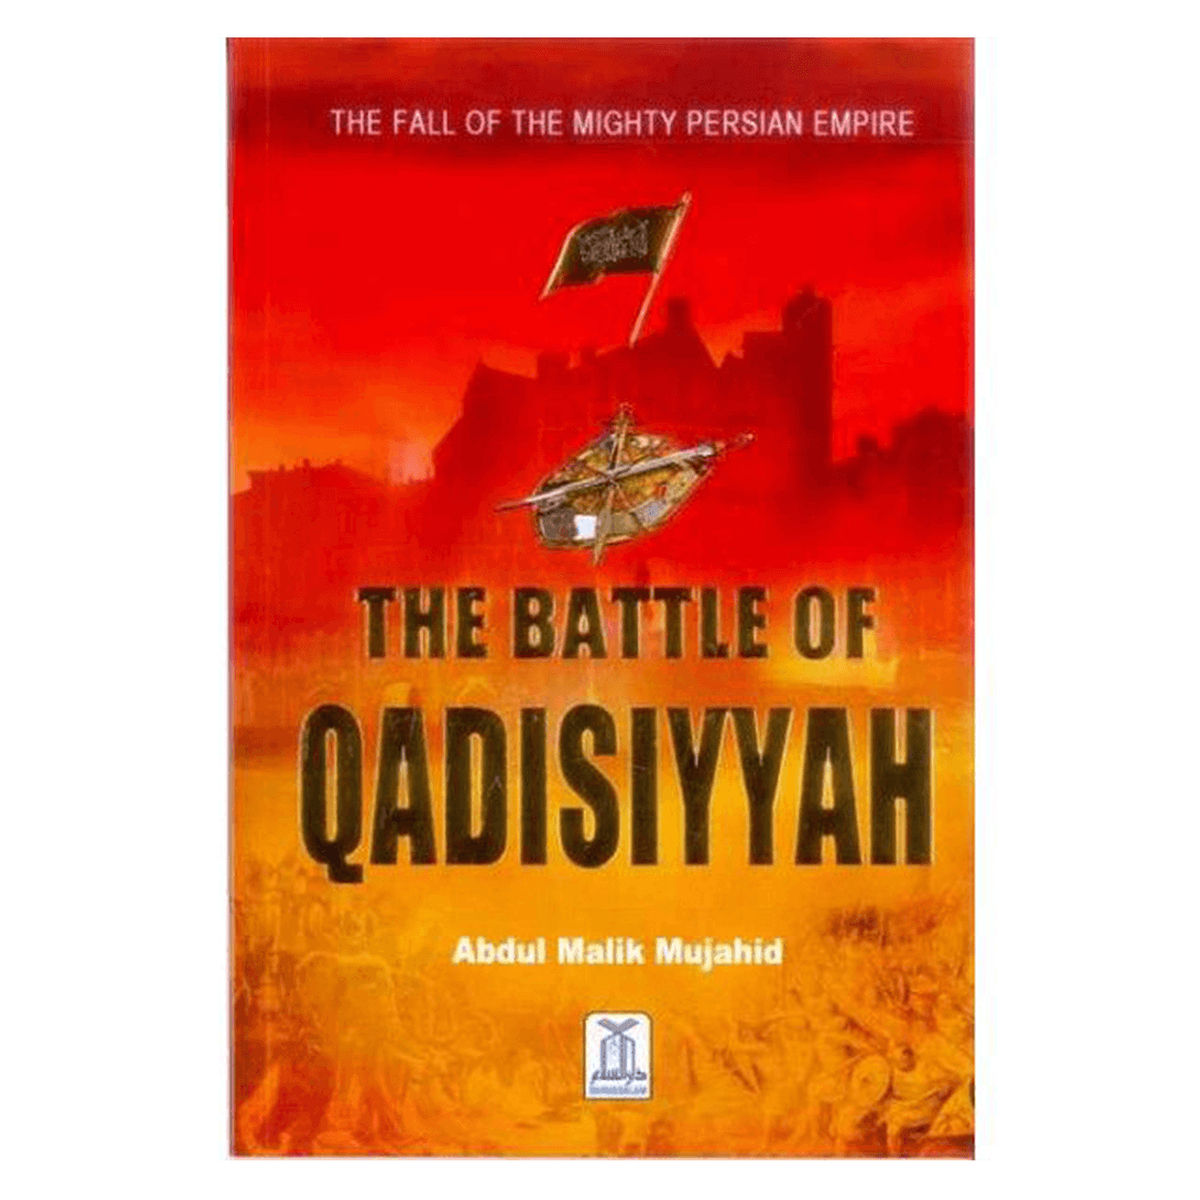 The Battle Of Qadisiyyah